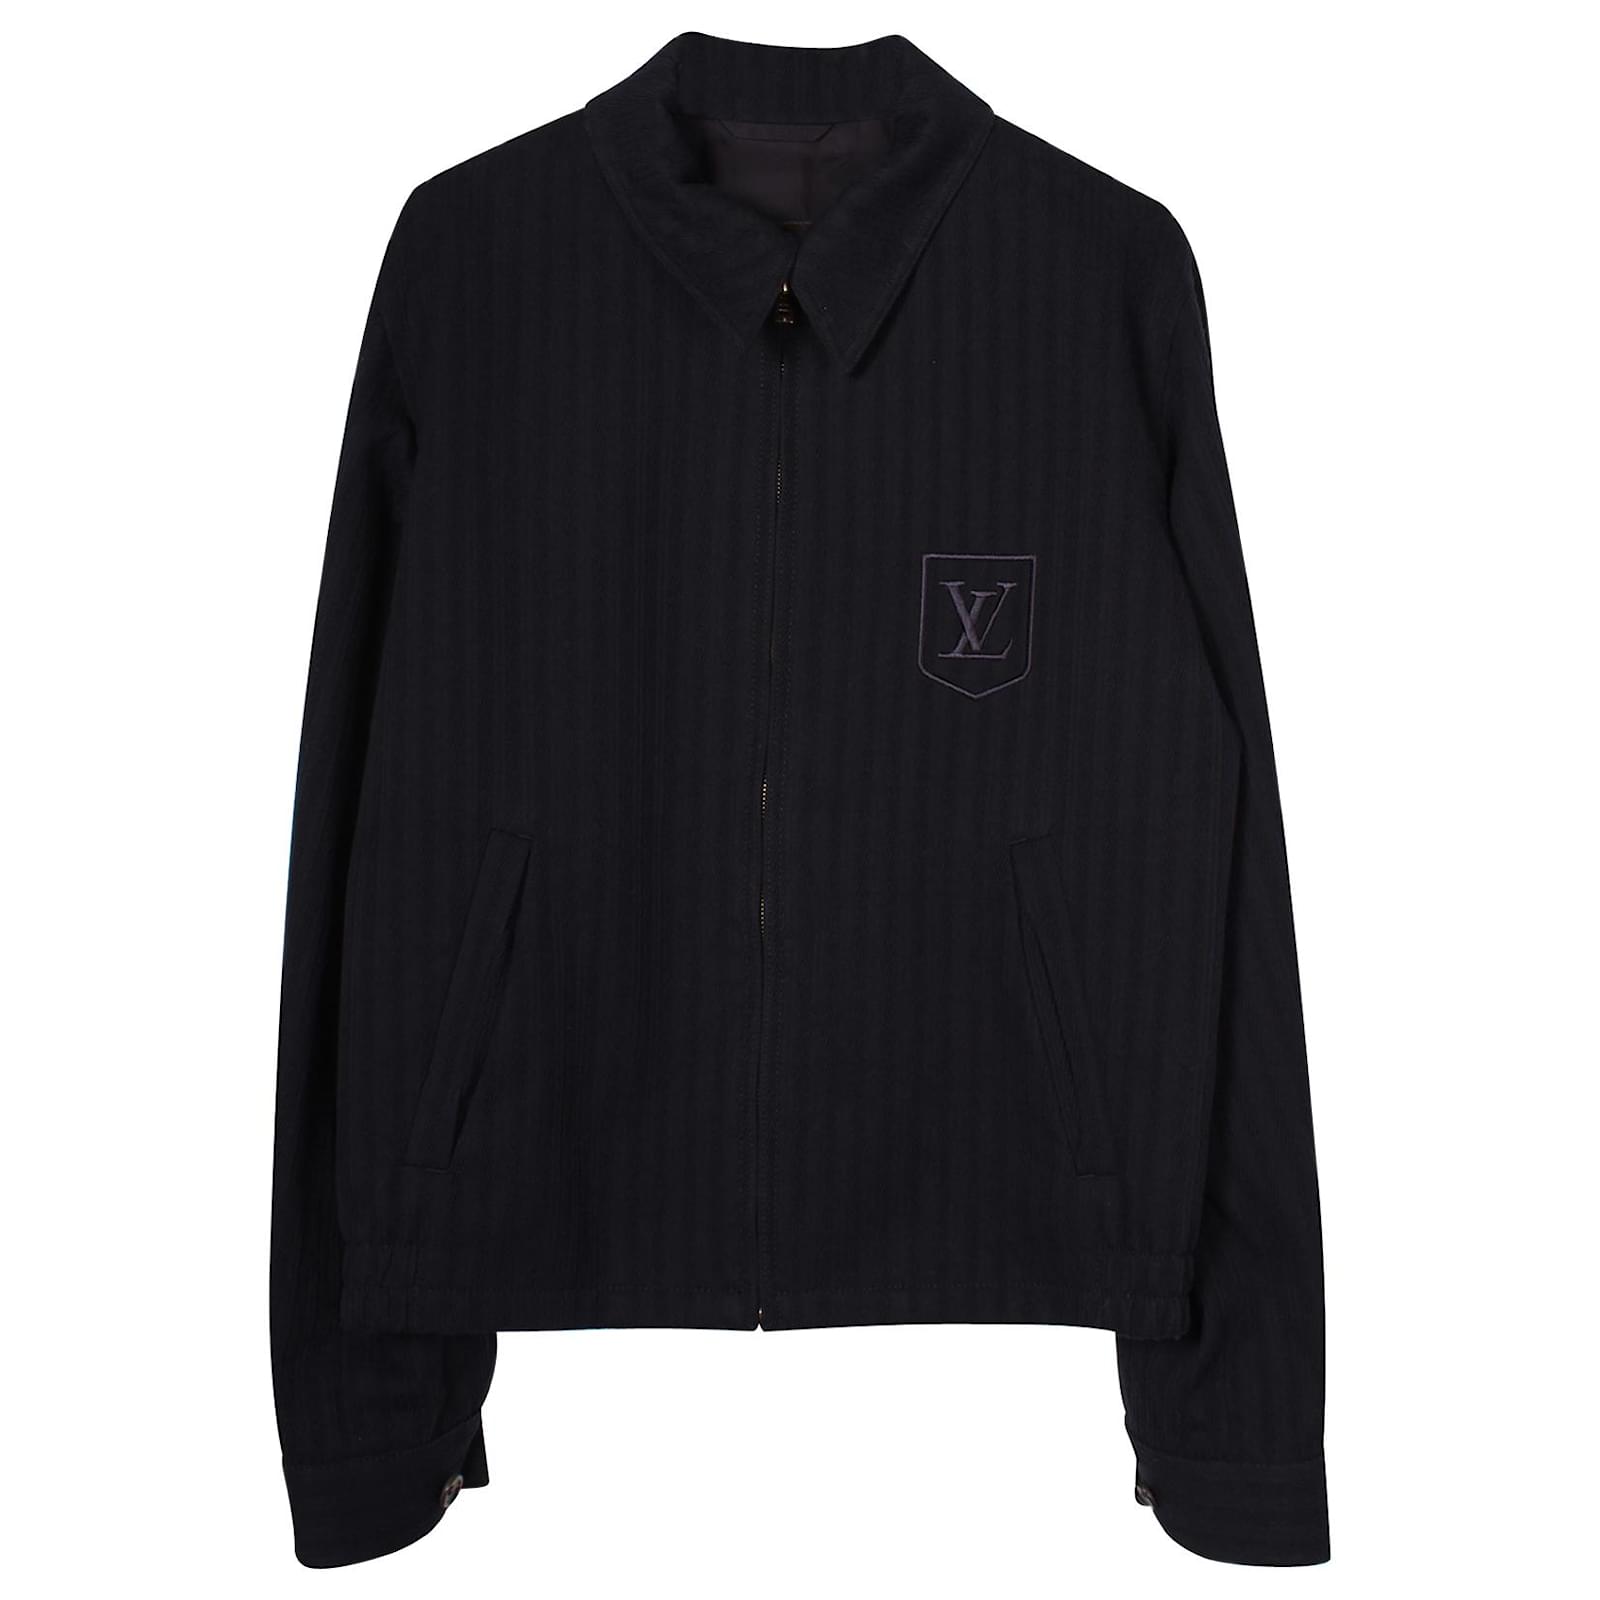 Louis Vuitton - Leather Accent Denim Jacket - China Blue - Women - Size: 36 - Luxury